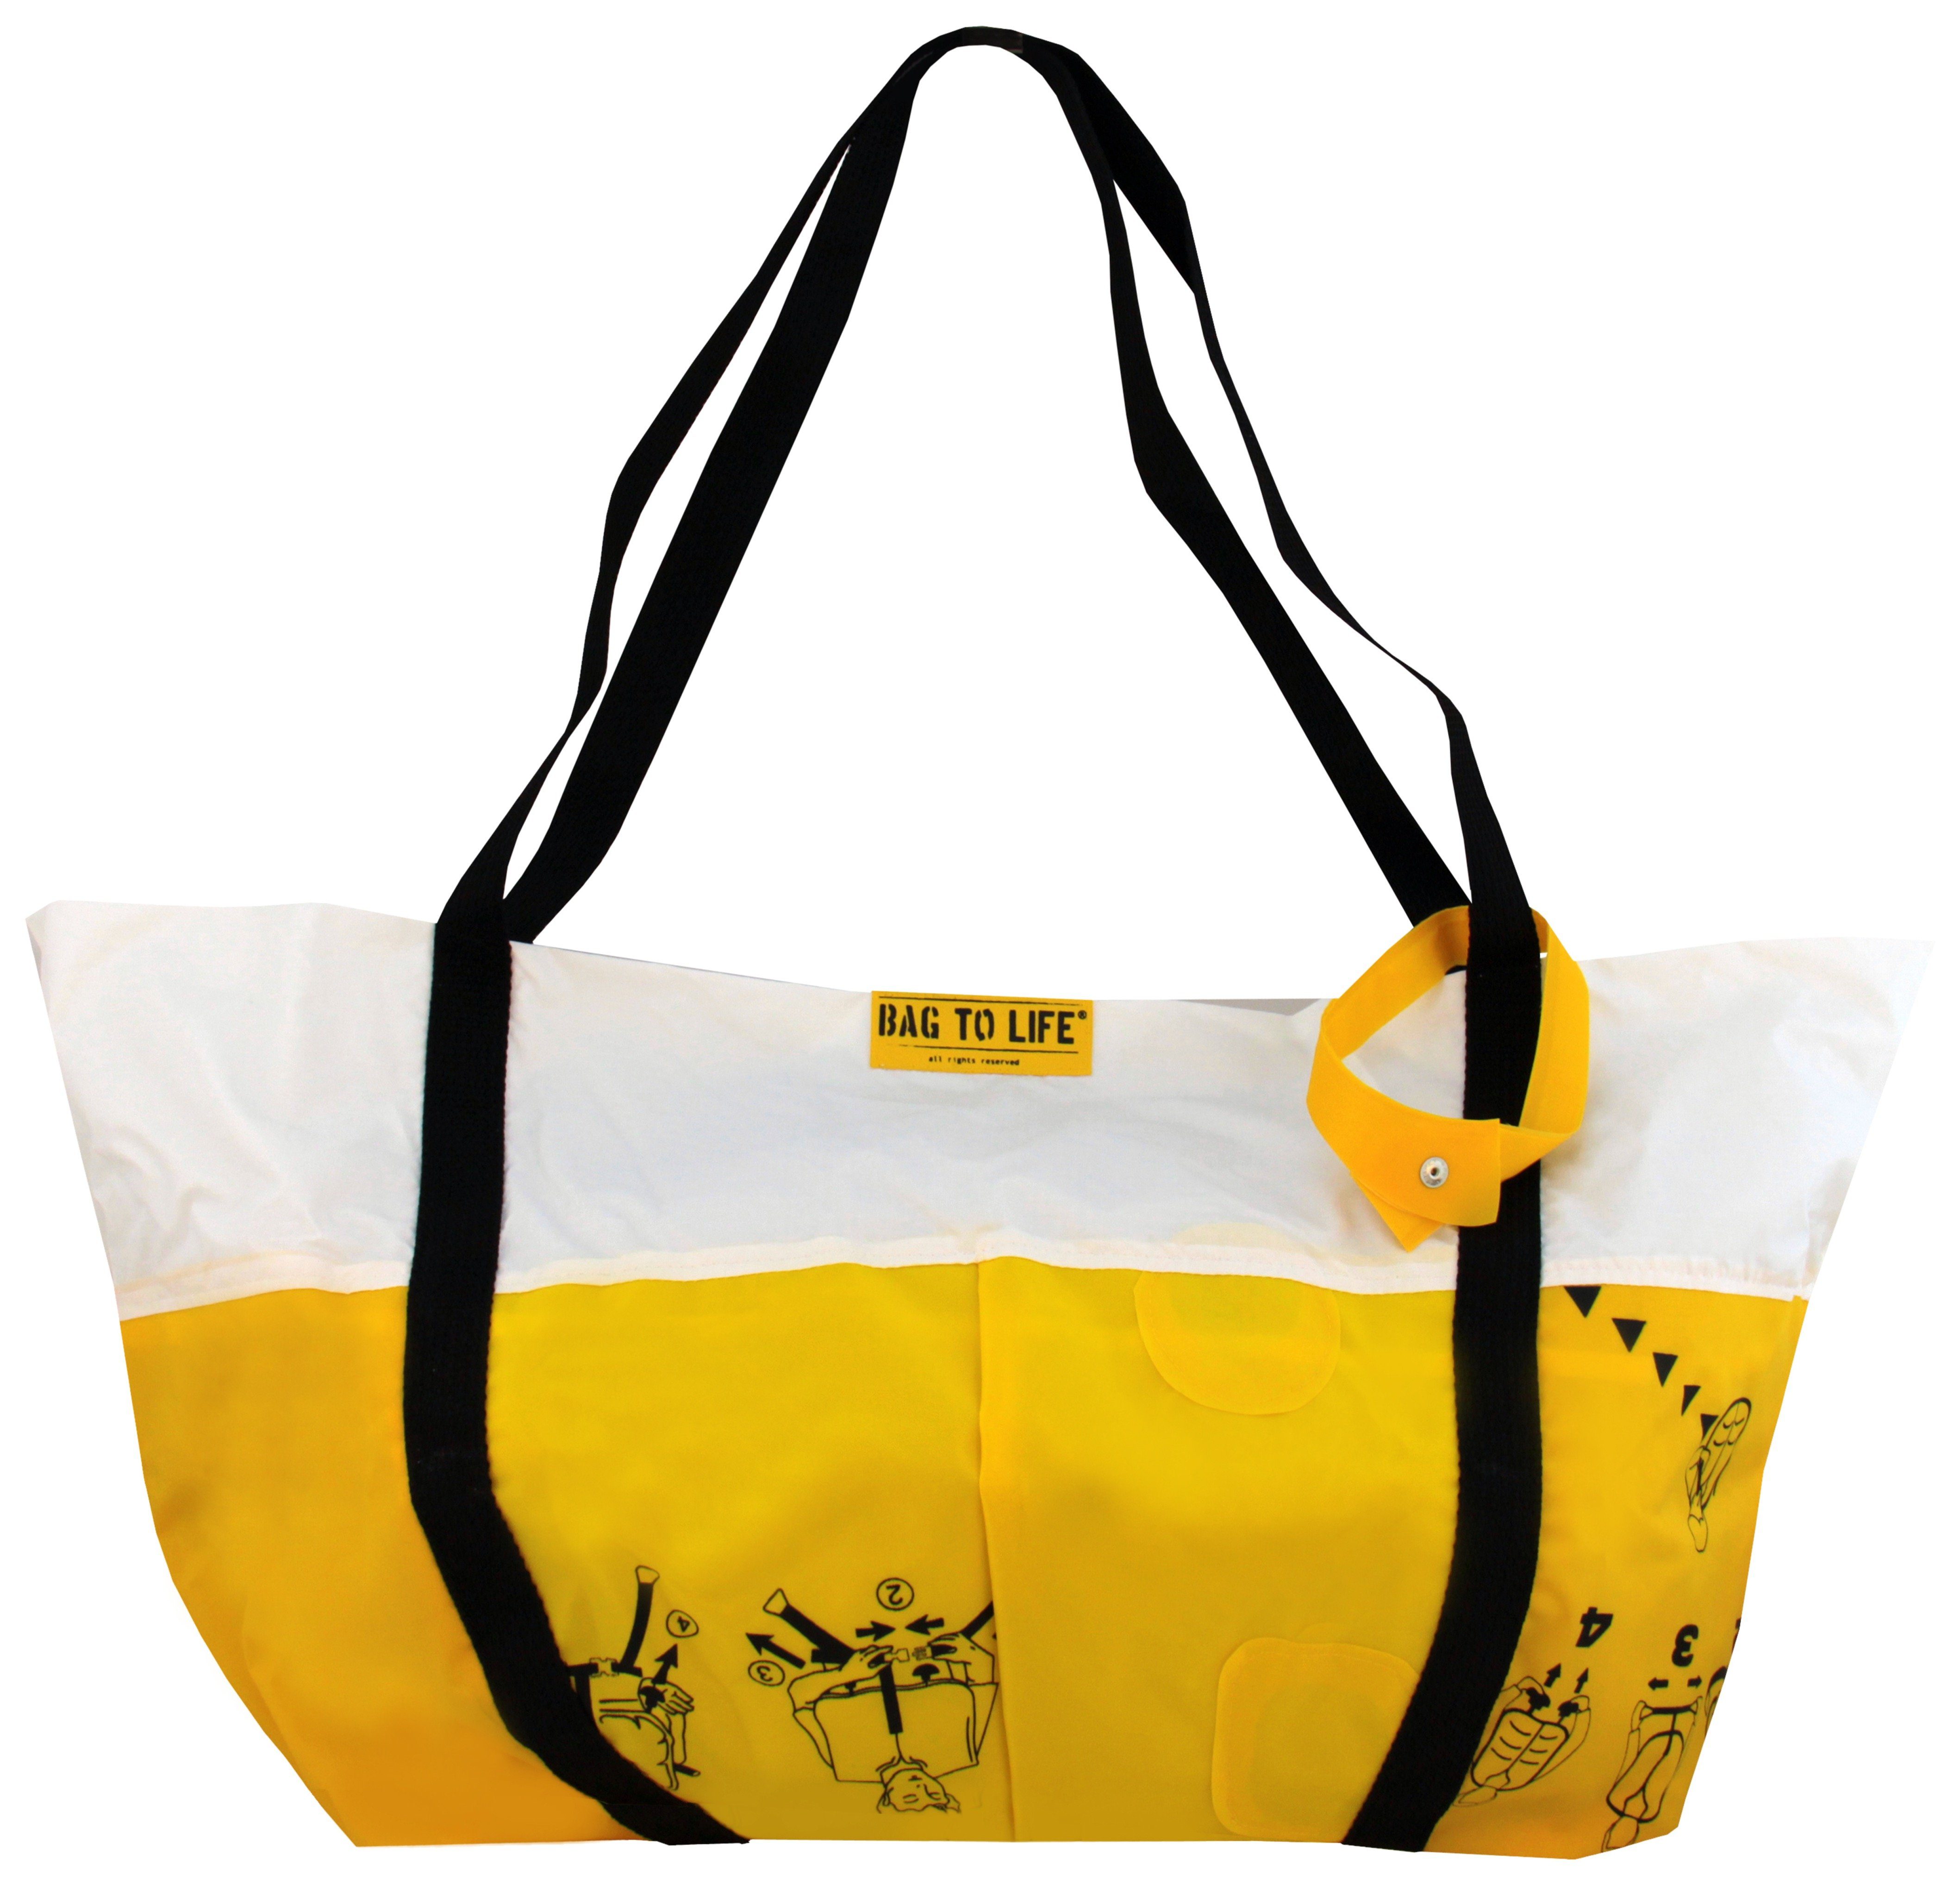 Bag aus Airlie, to Life Rettungsweste recycelter Shopper